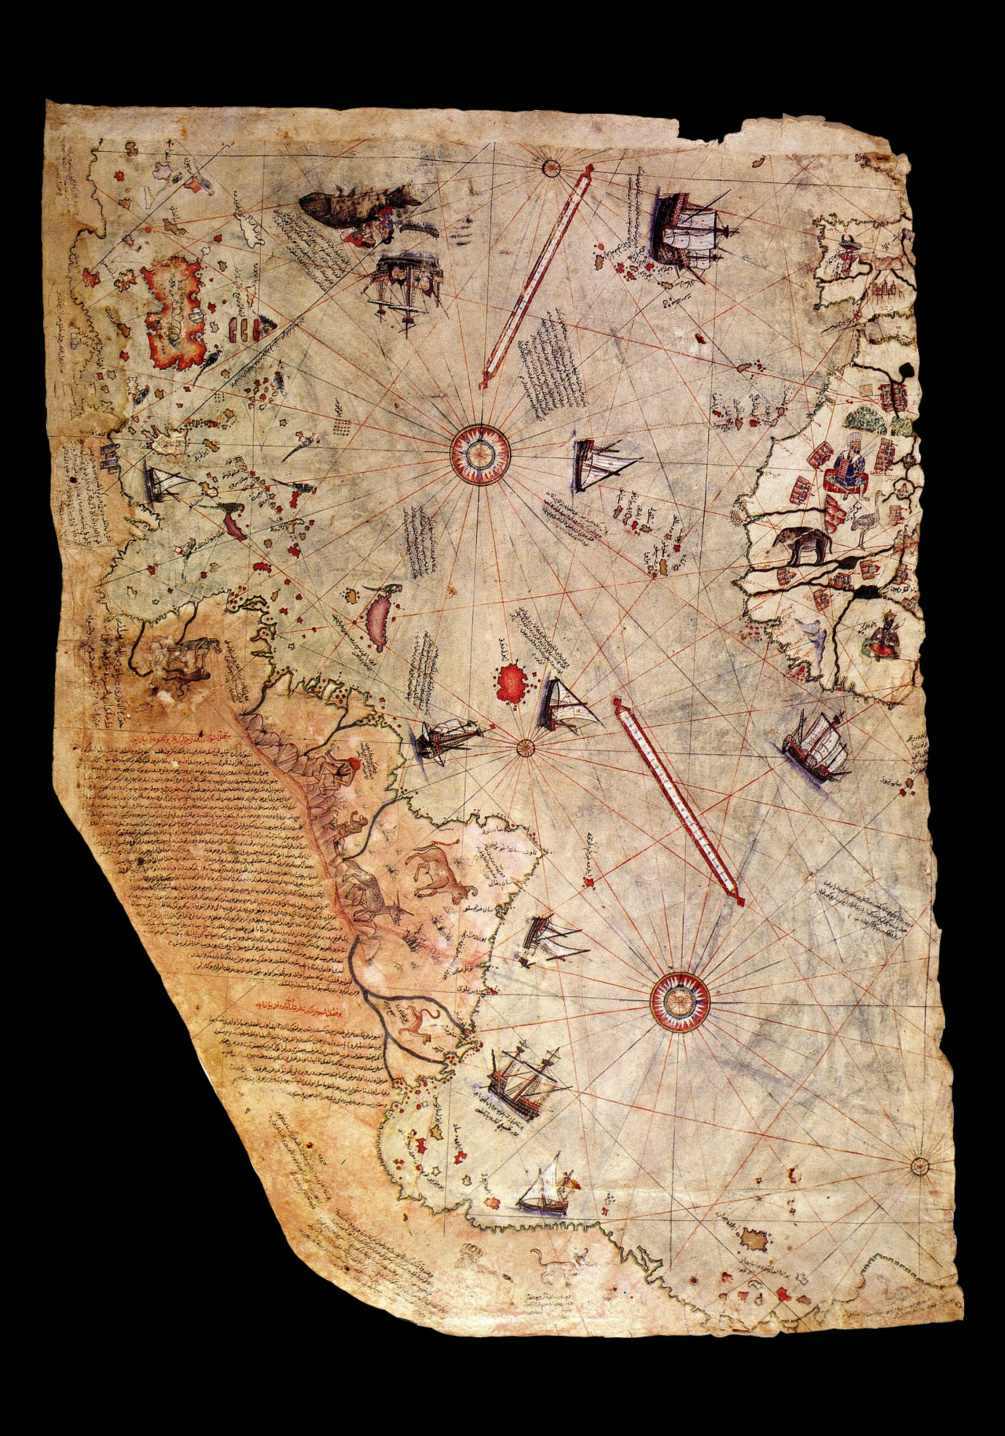 The Piri Reis Map